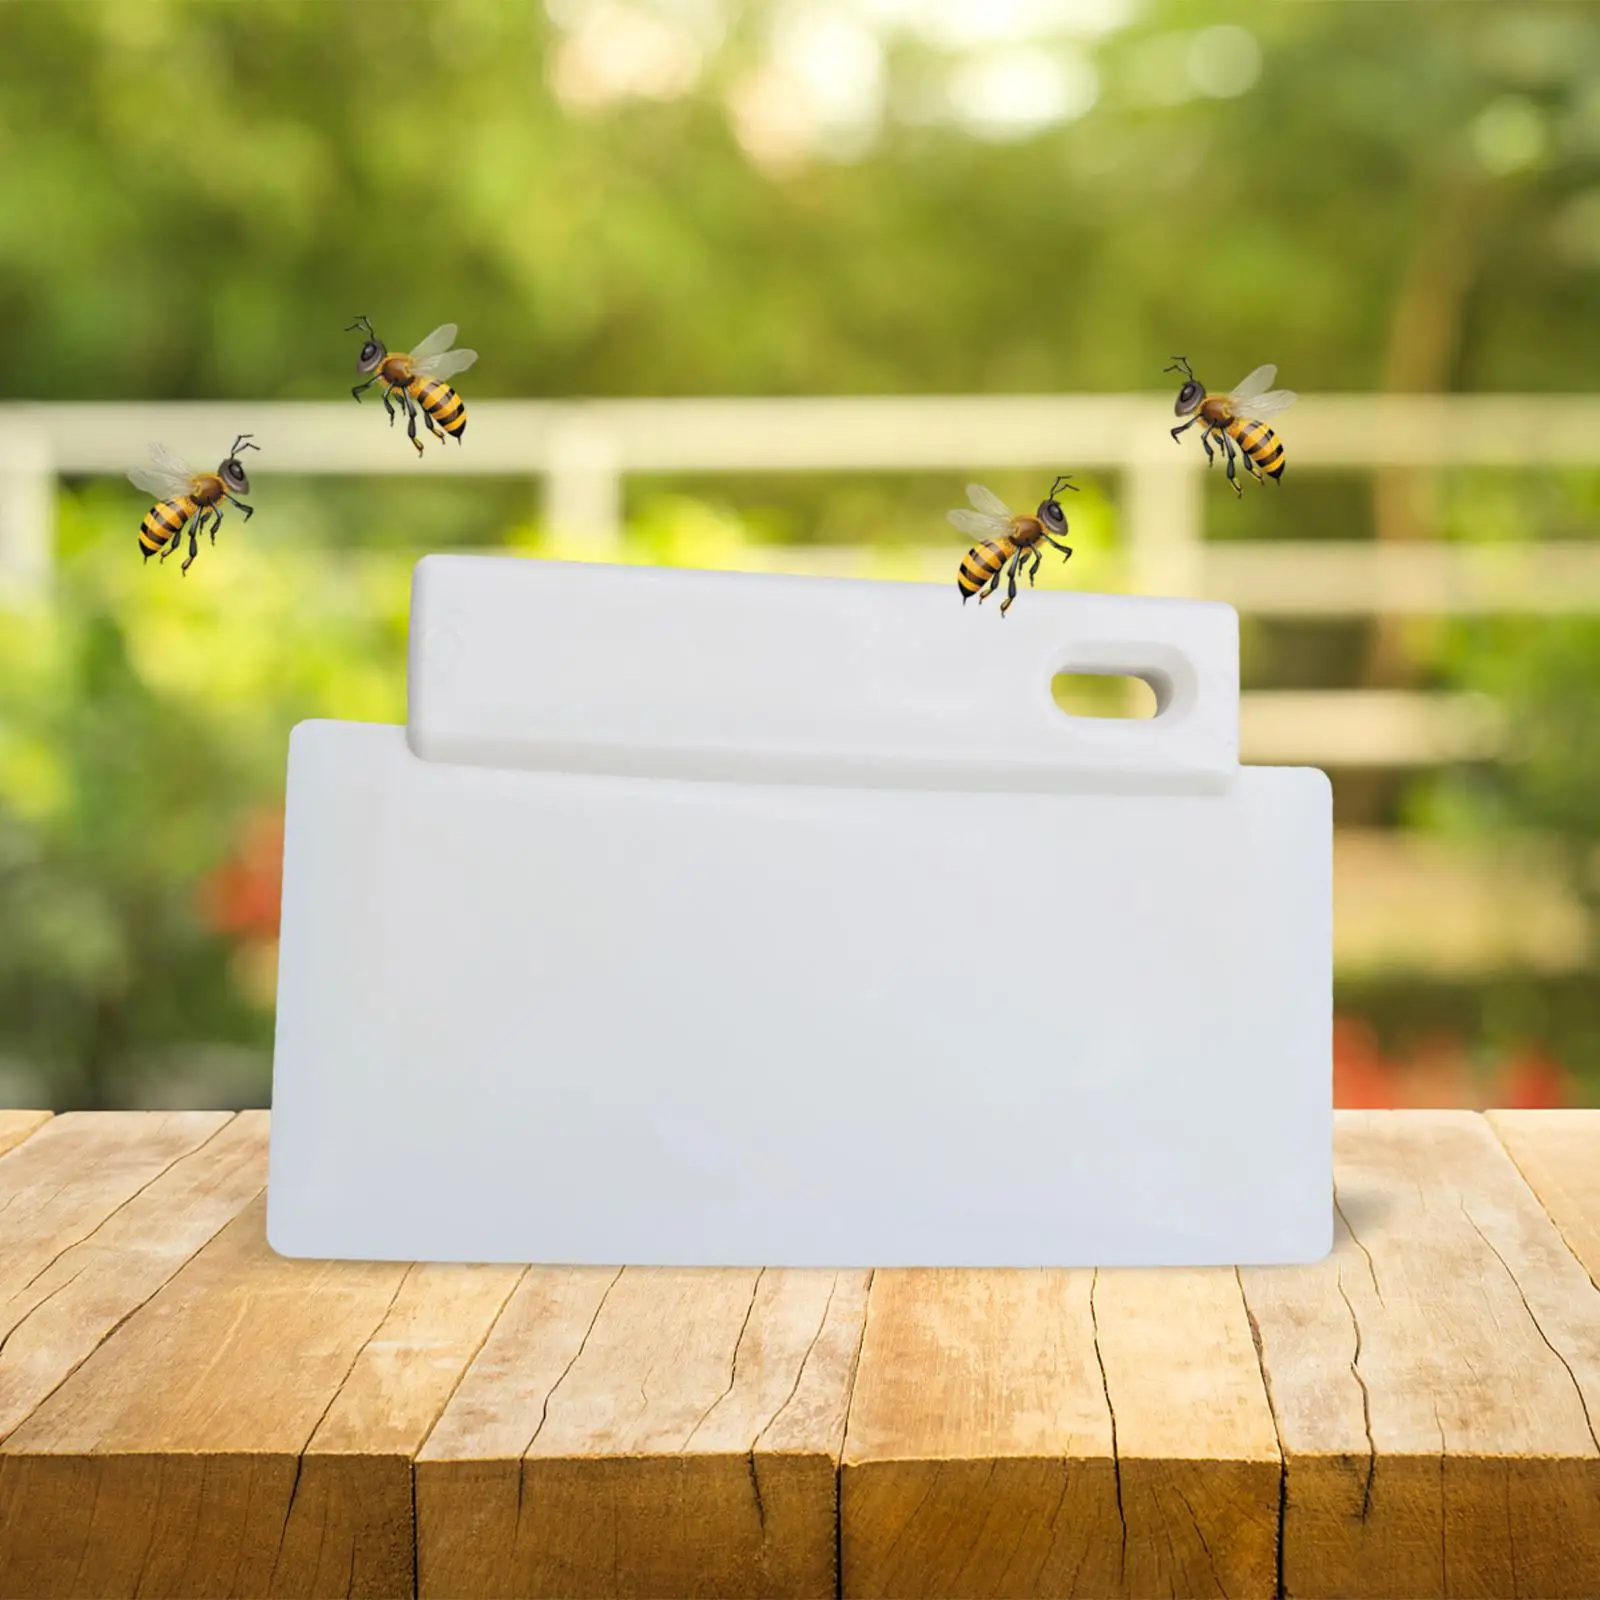 Beekeeping Honey Beekeeping Honey Multifunction Easy to Use Beeswax Uncapping Tool Durable Reusable